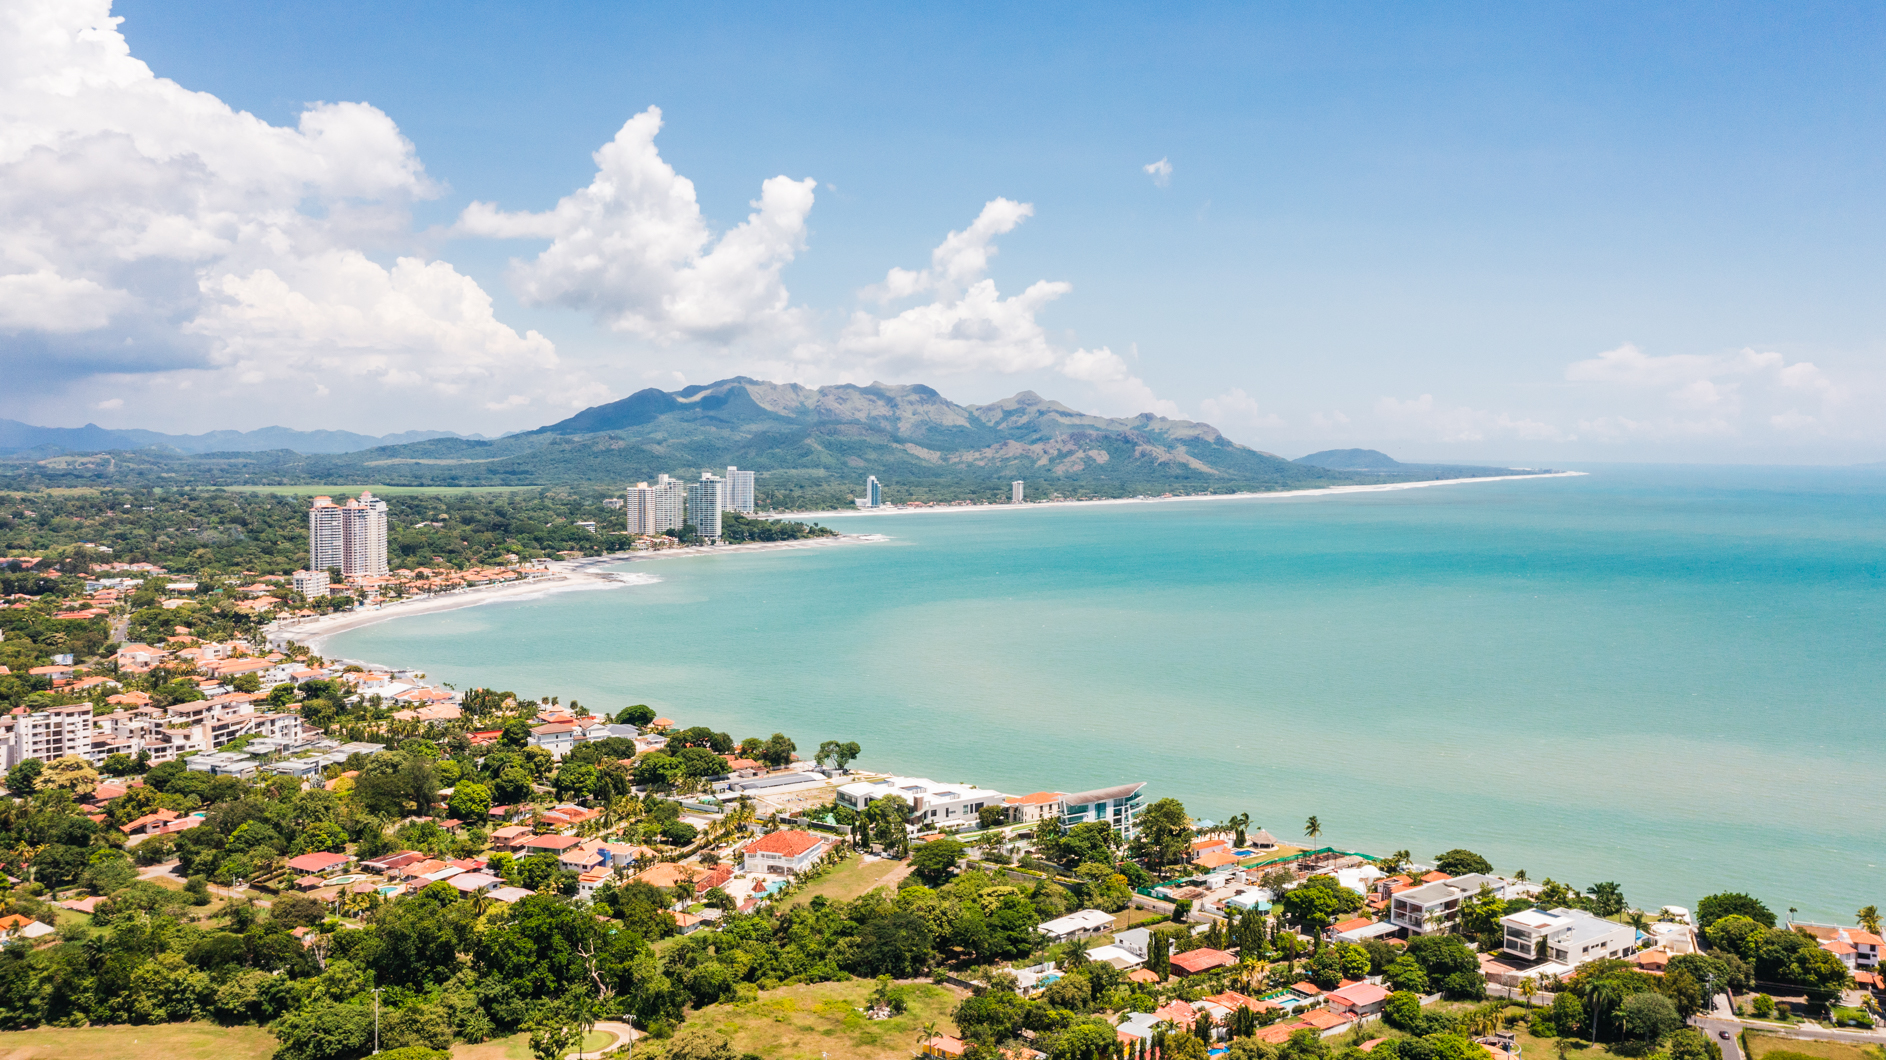 Your Dream Bed & Breakfast Coronado, Panama – A Tropical Beach Oasis Awaits